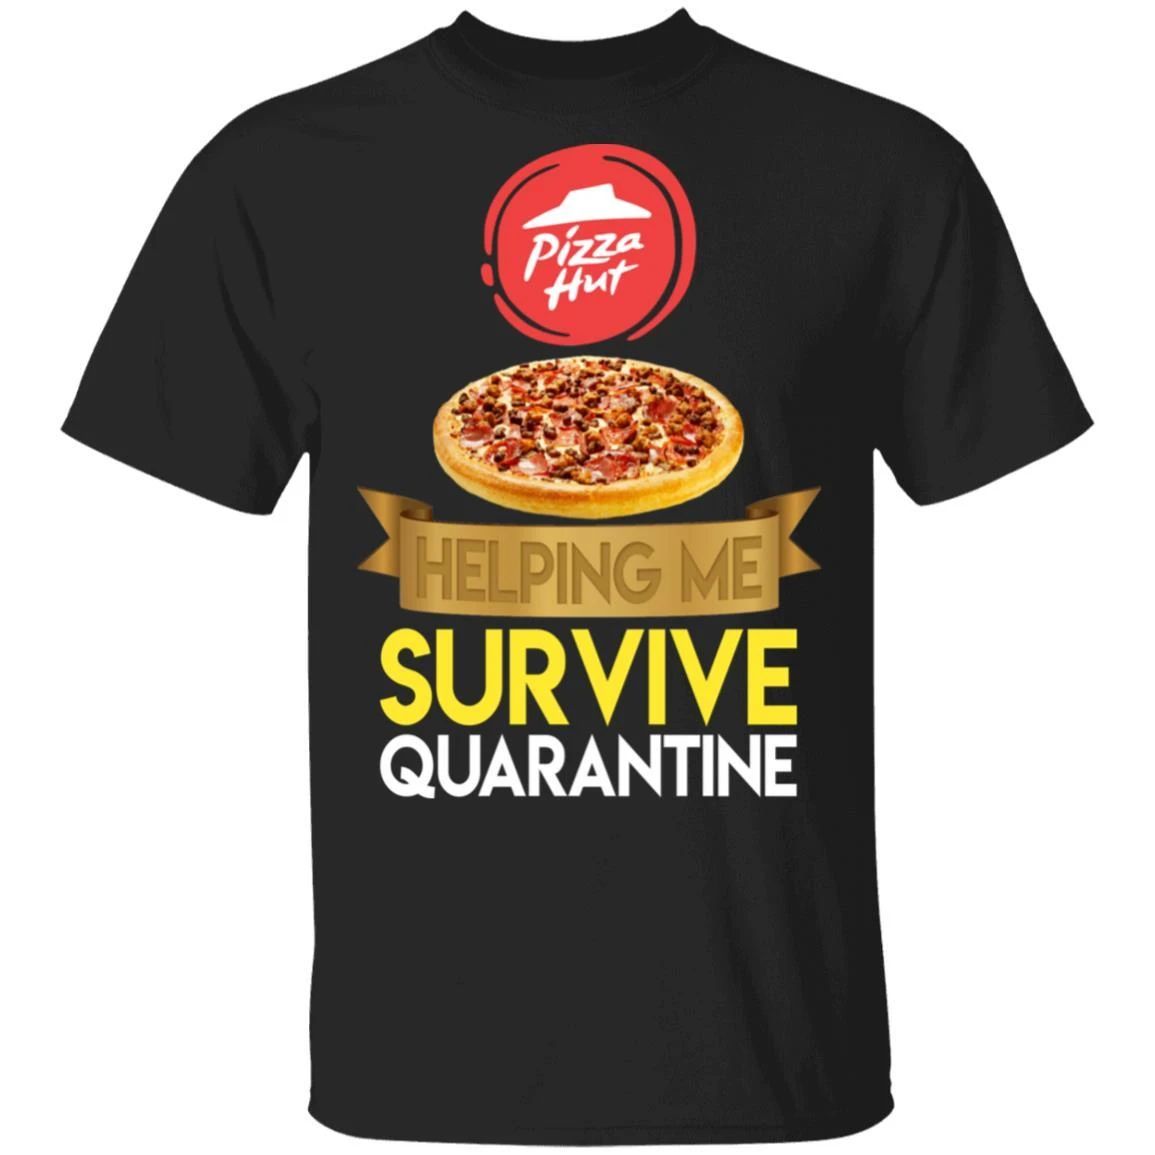 Pizza Hut Helping Me Survive Quarantine T-shirt